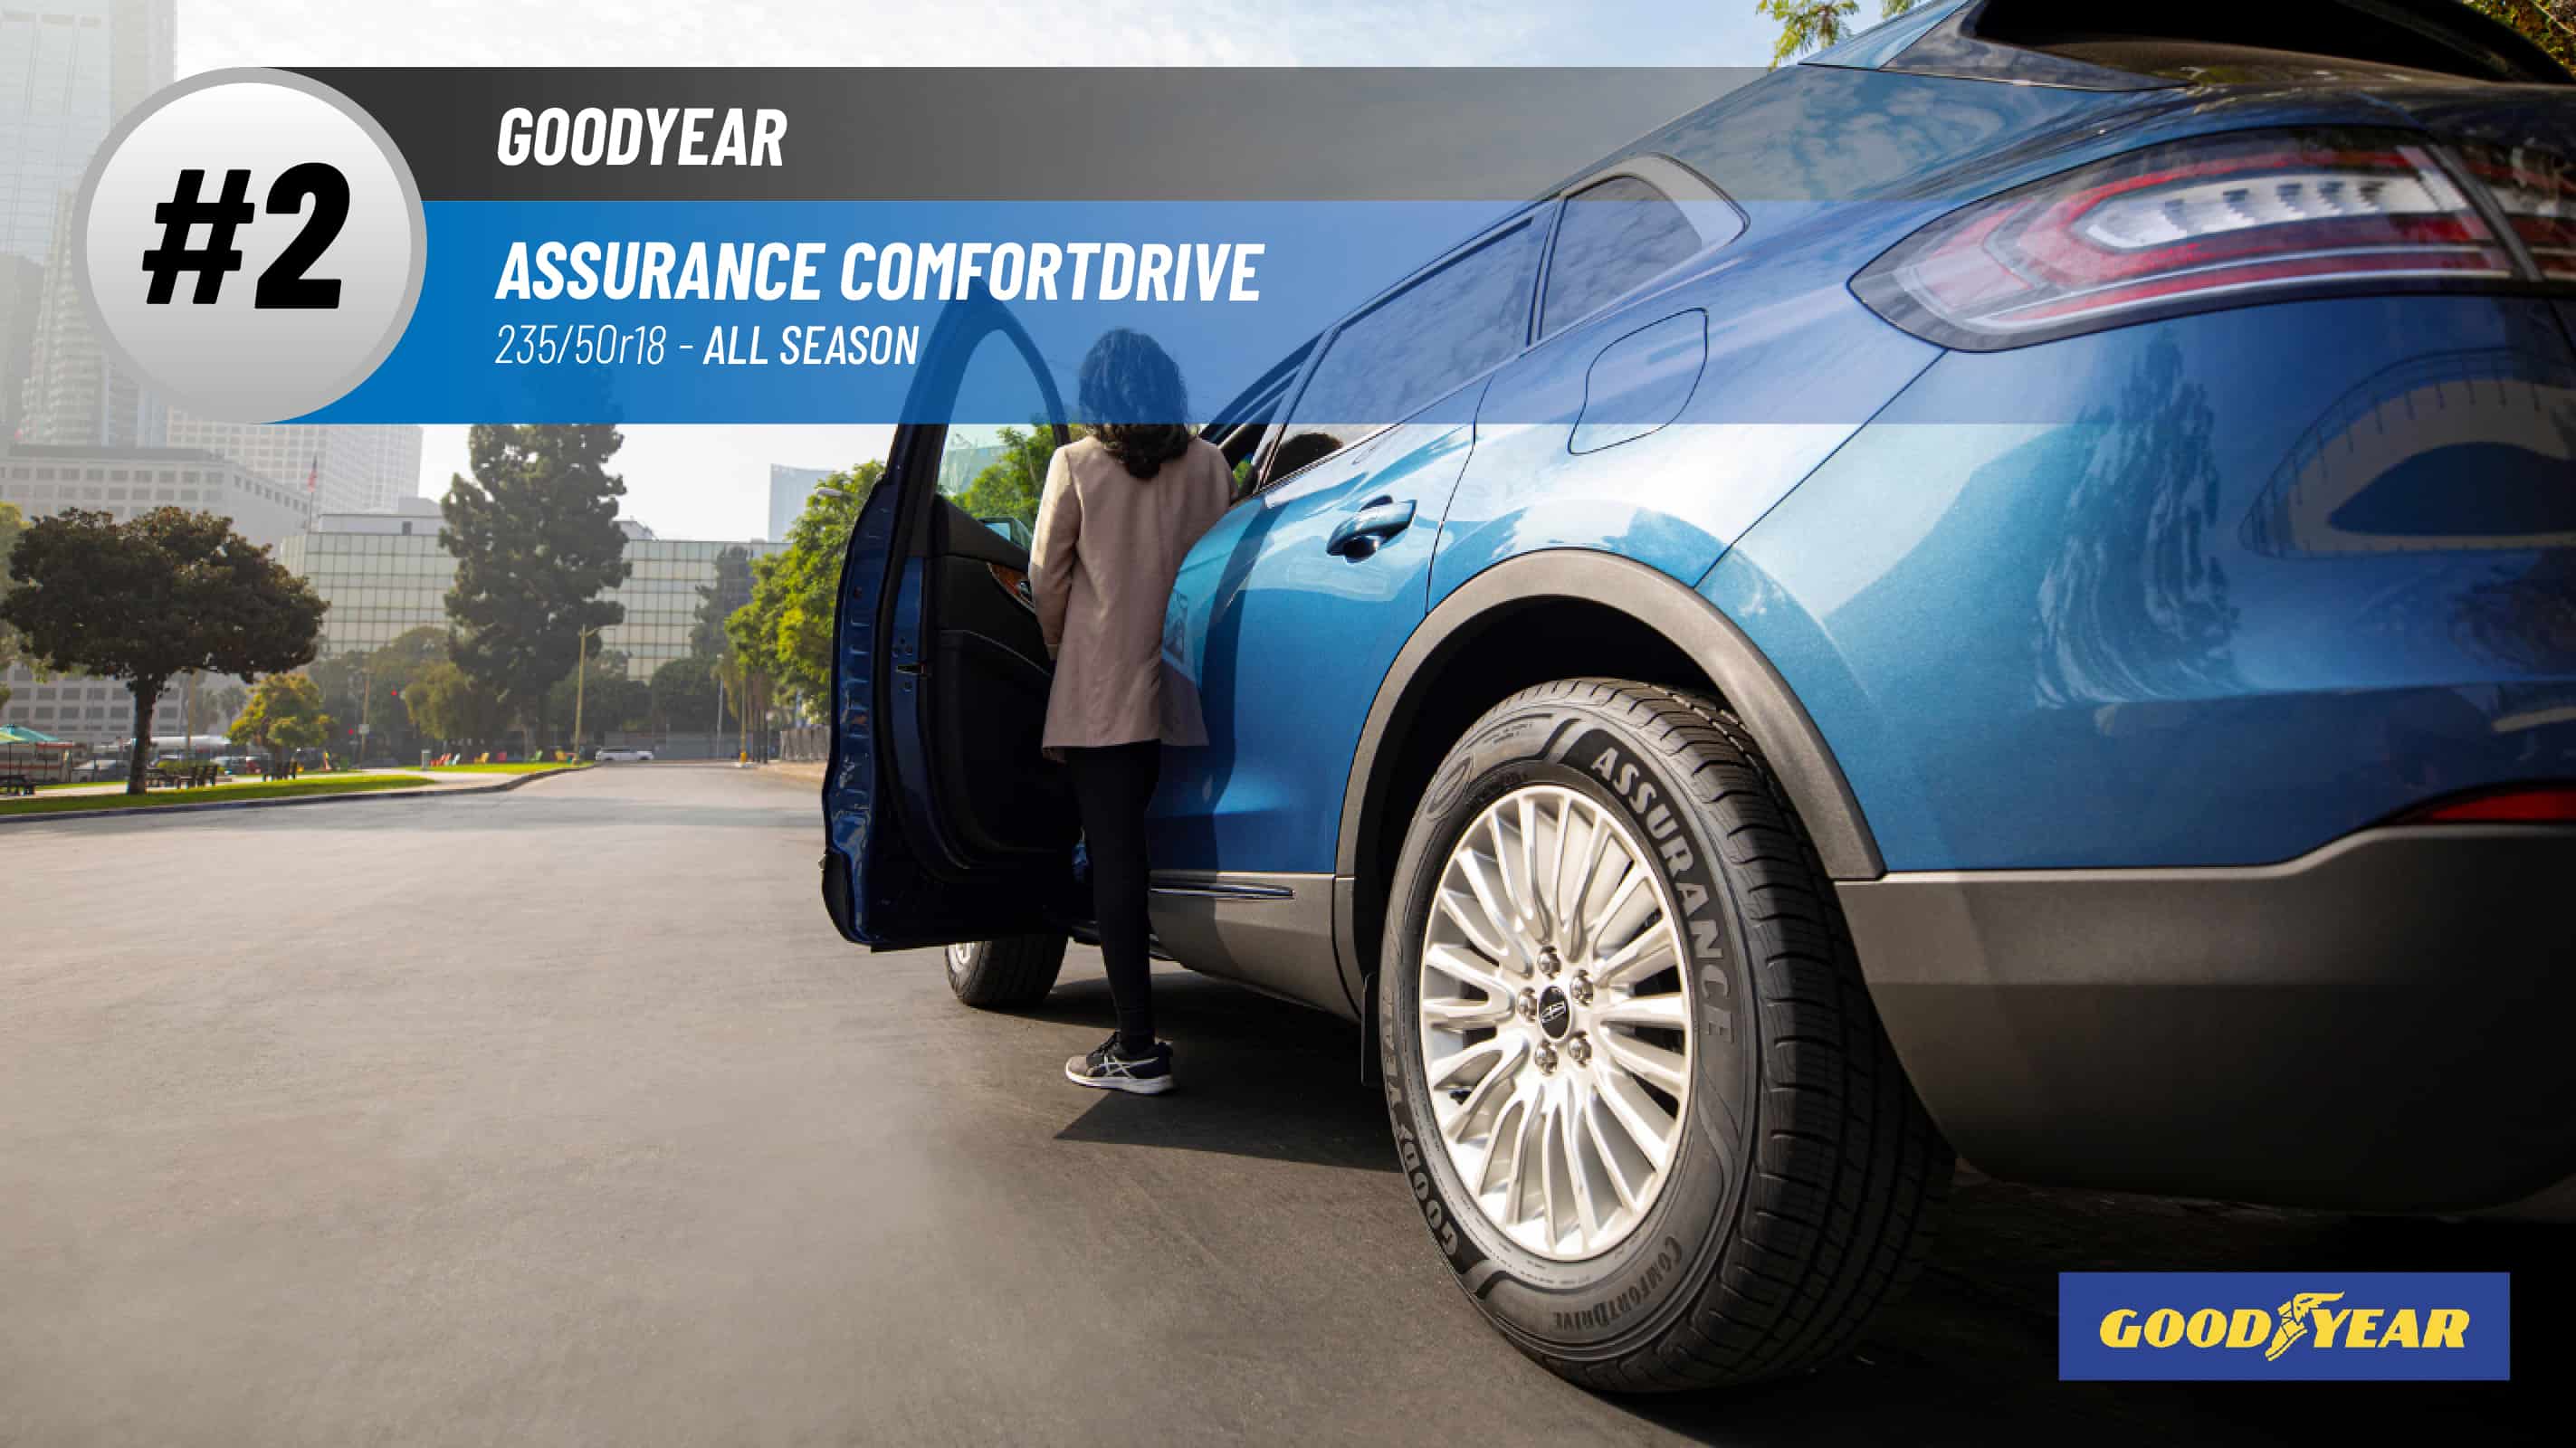 Top #2 All Season Tires: Goodyear Assurance ComfortDrive – best 235/50r18